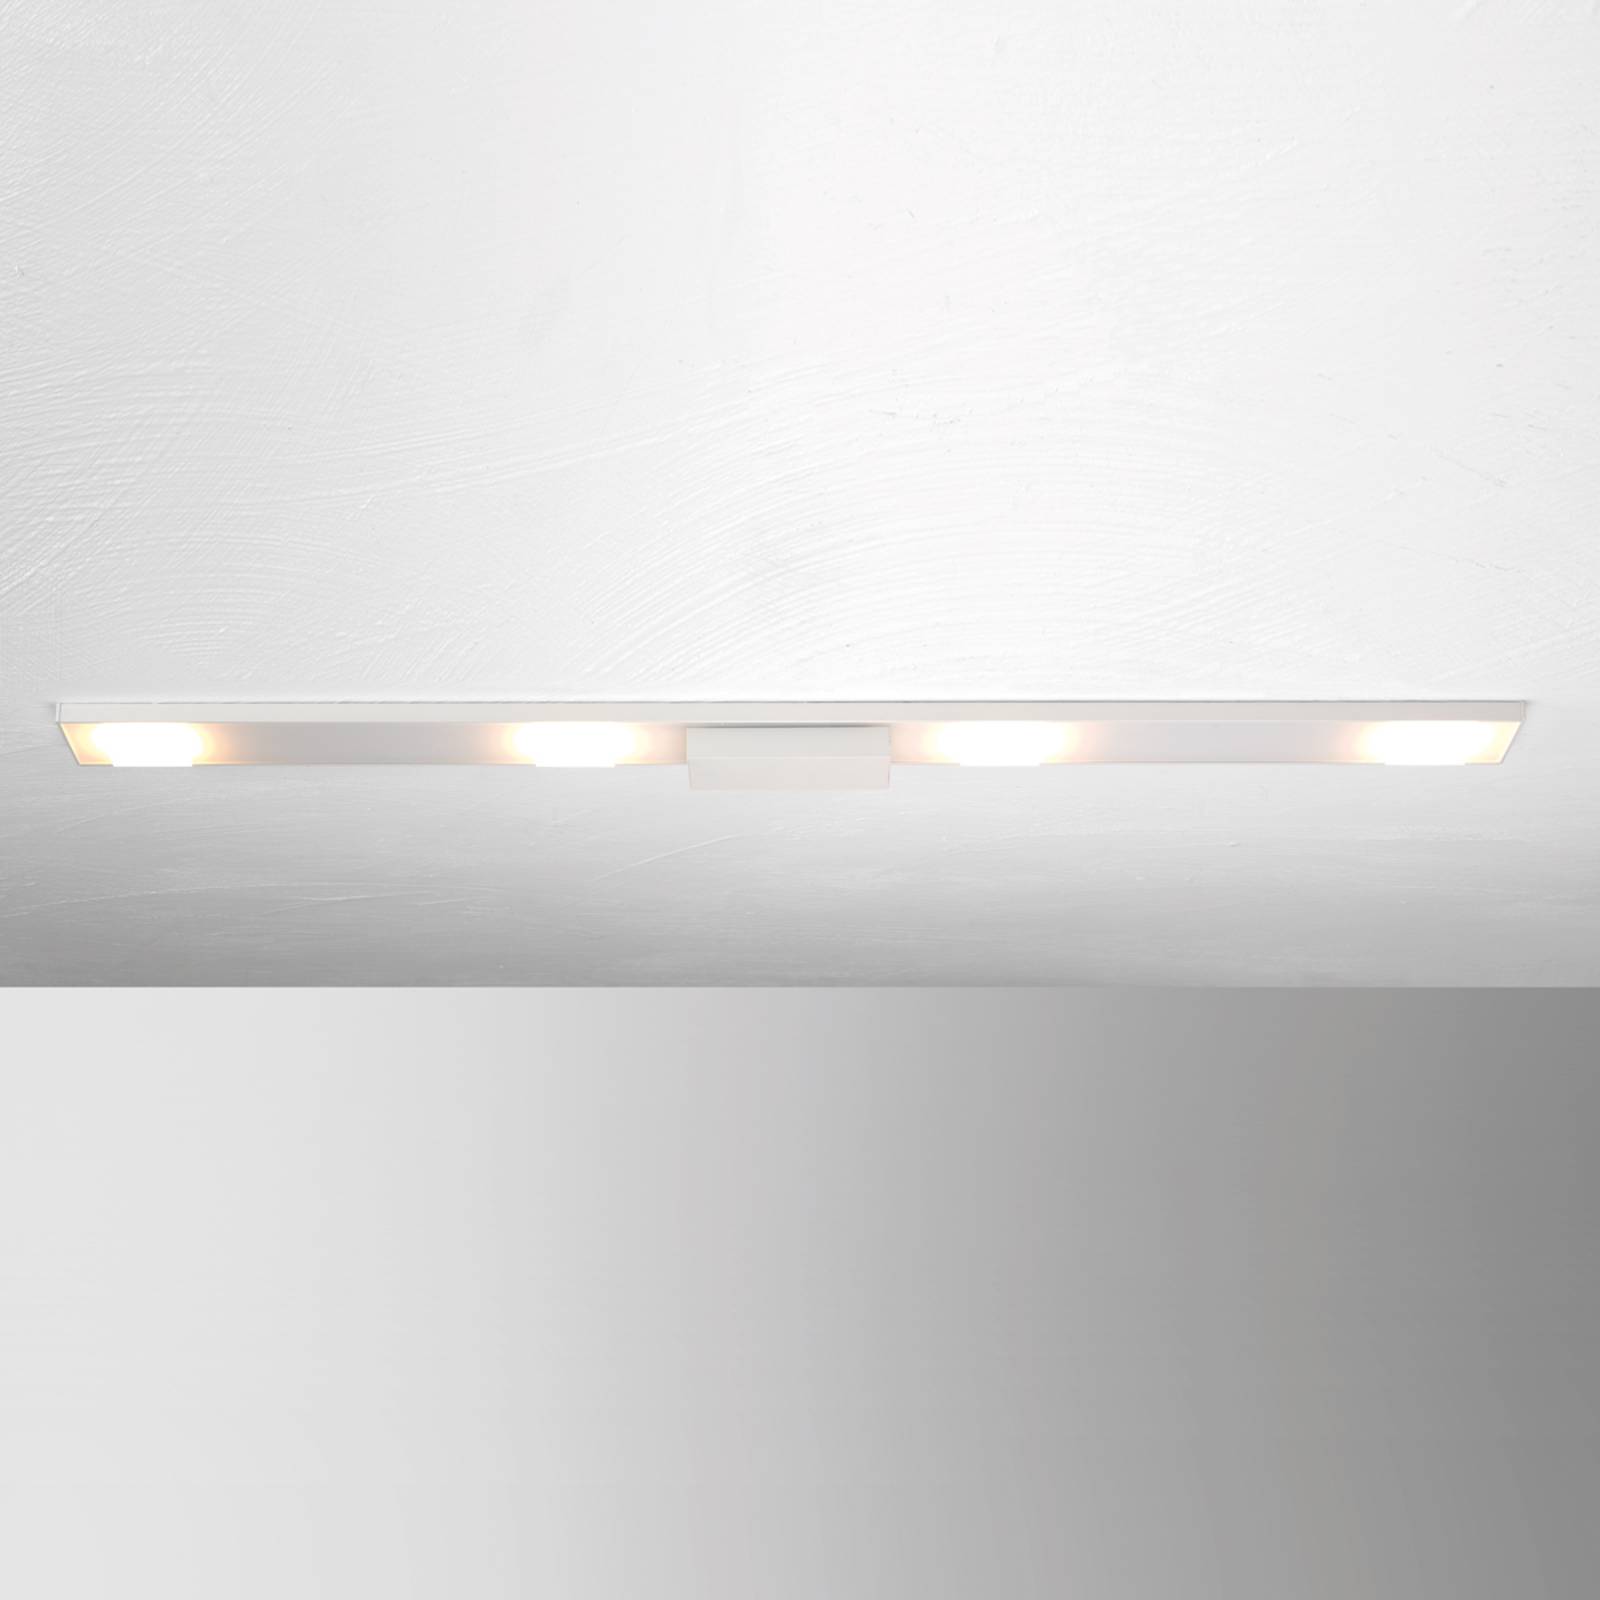 LED plafondlamp Slight met vier lampjes, wit